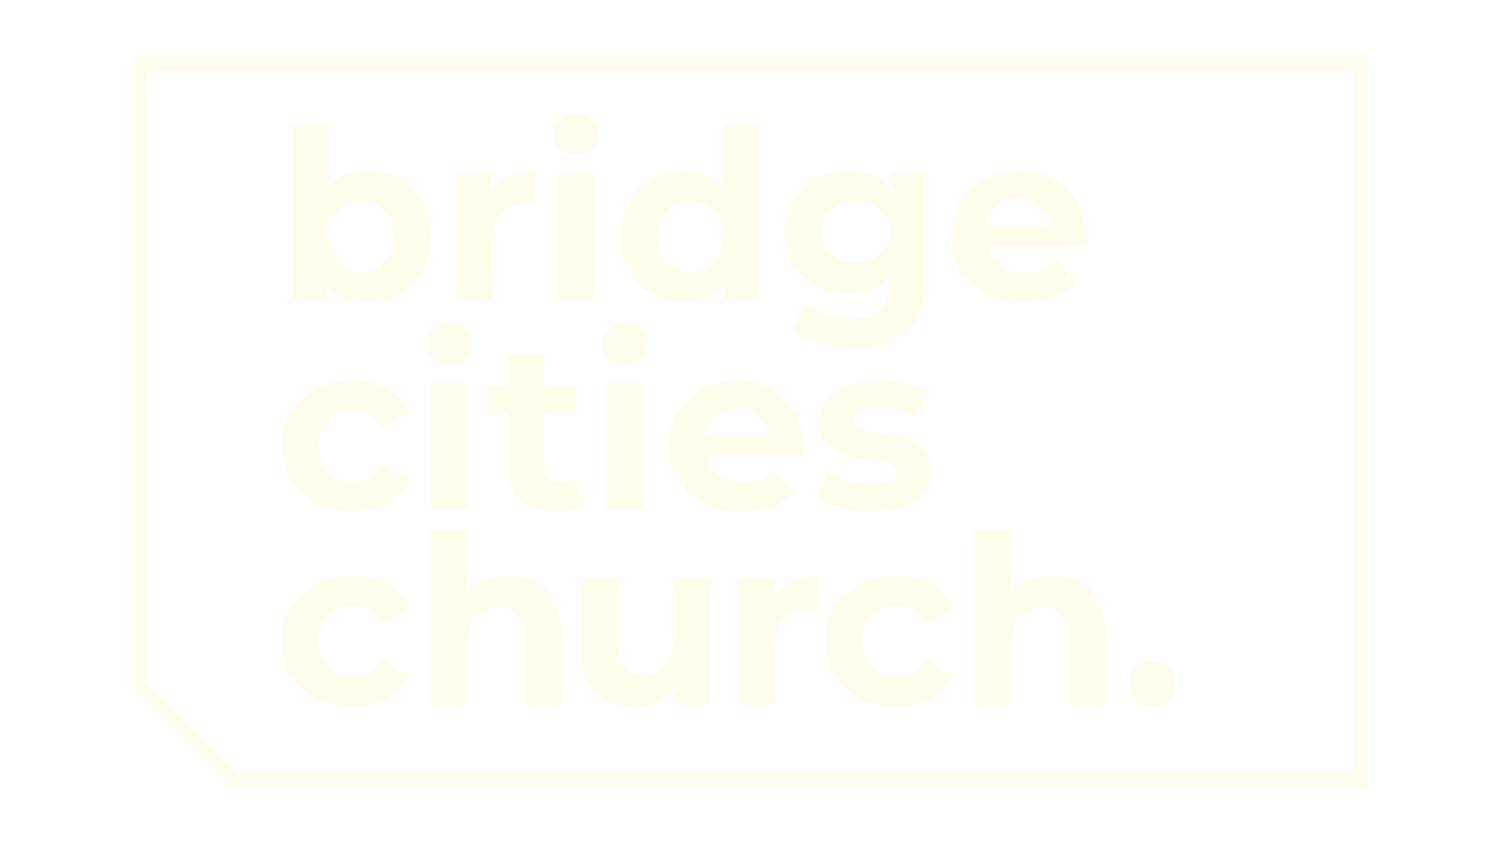 Bridge Cities Church